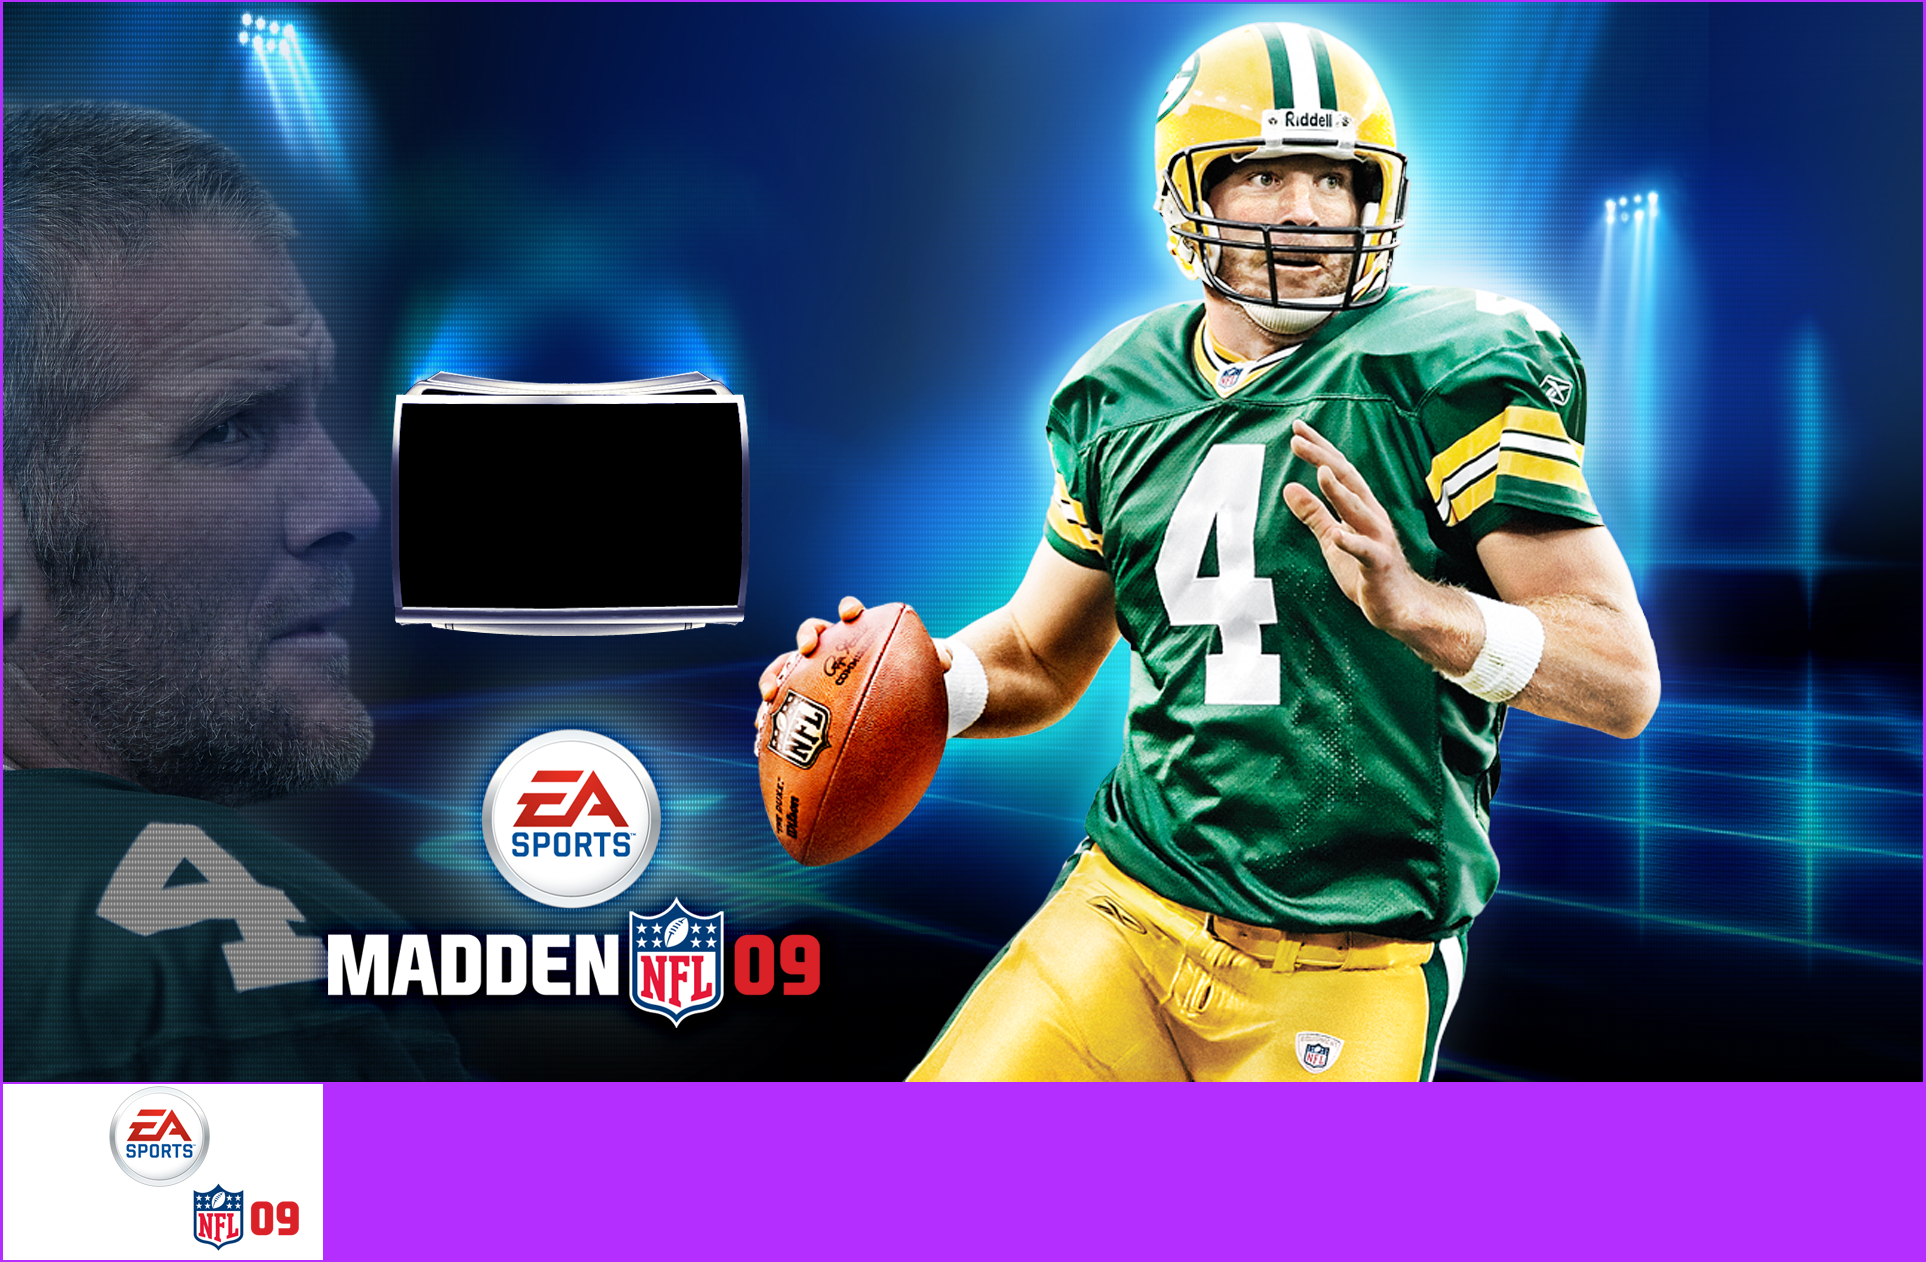 Madden NFL 09 - Game Banner & Icon